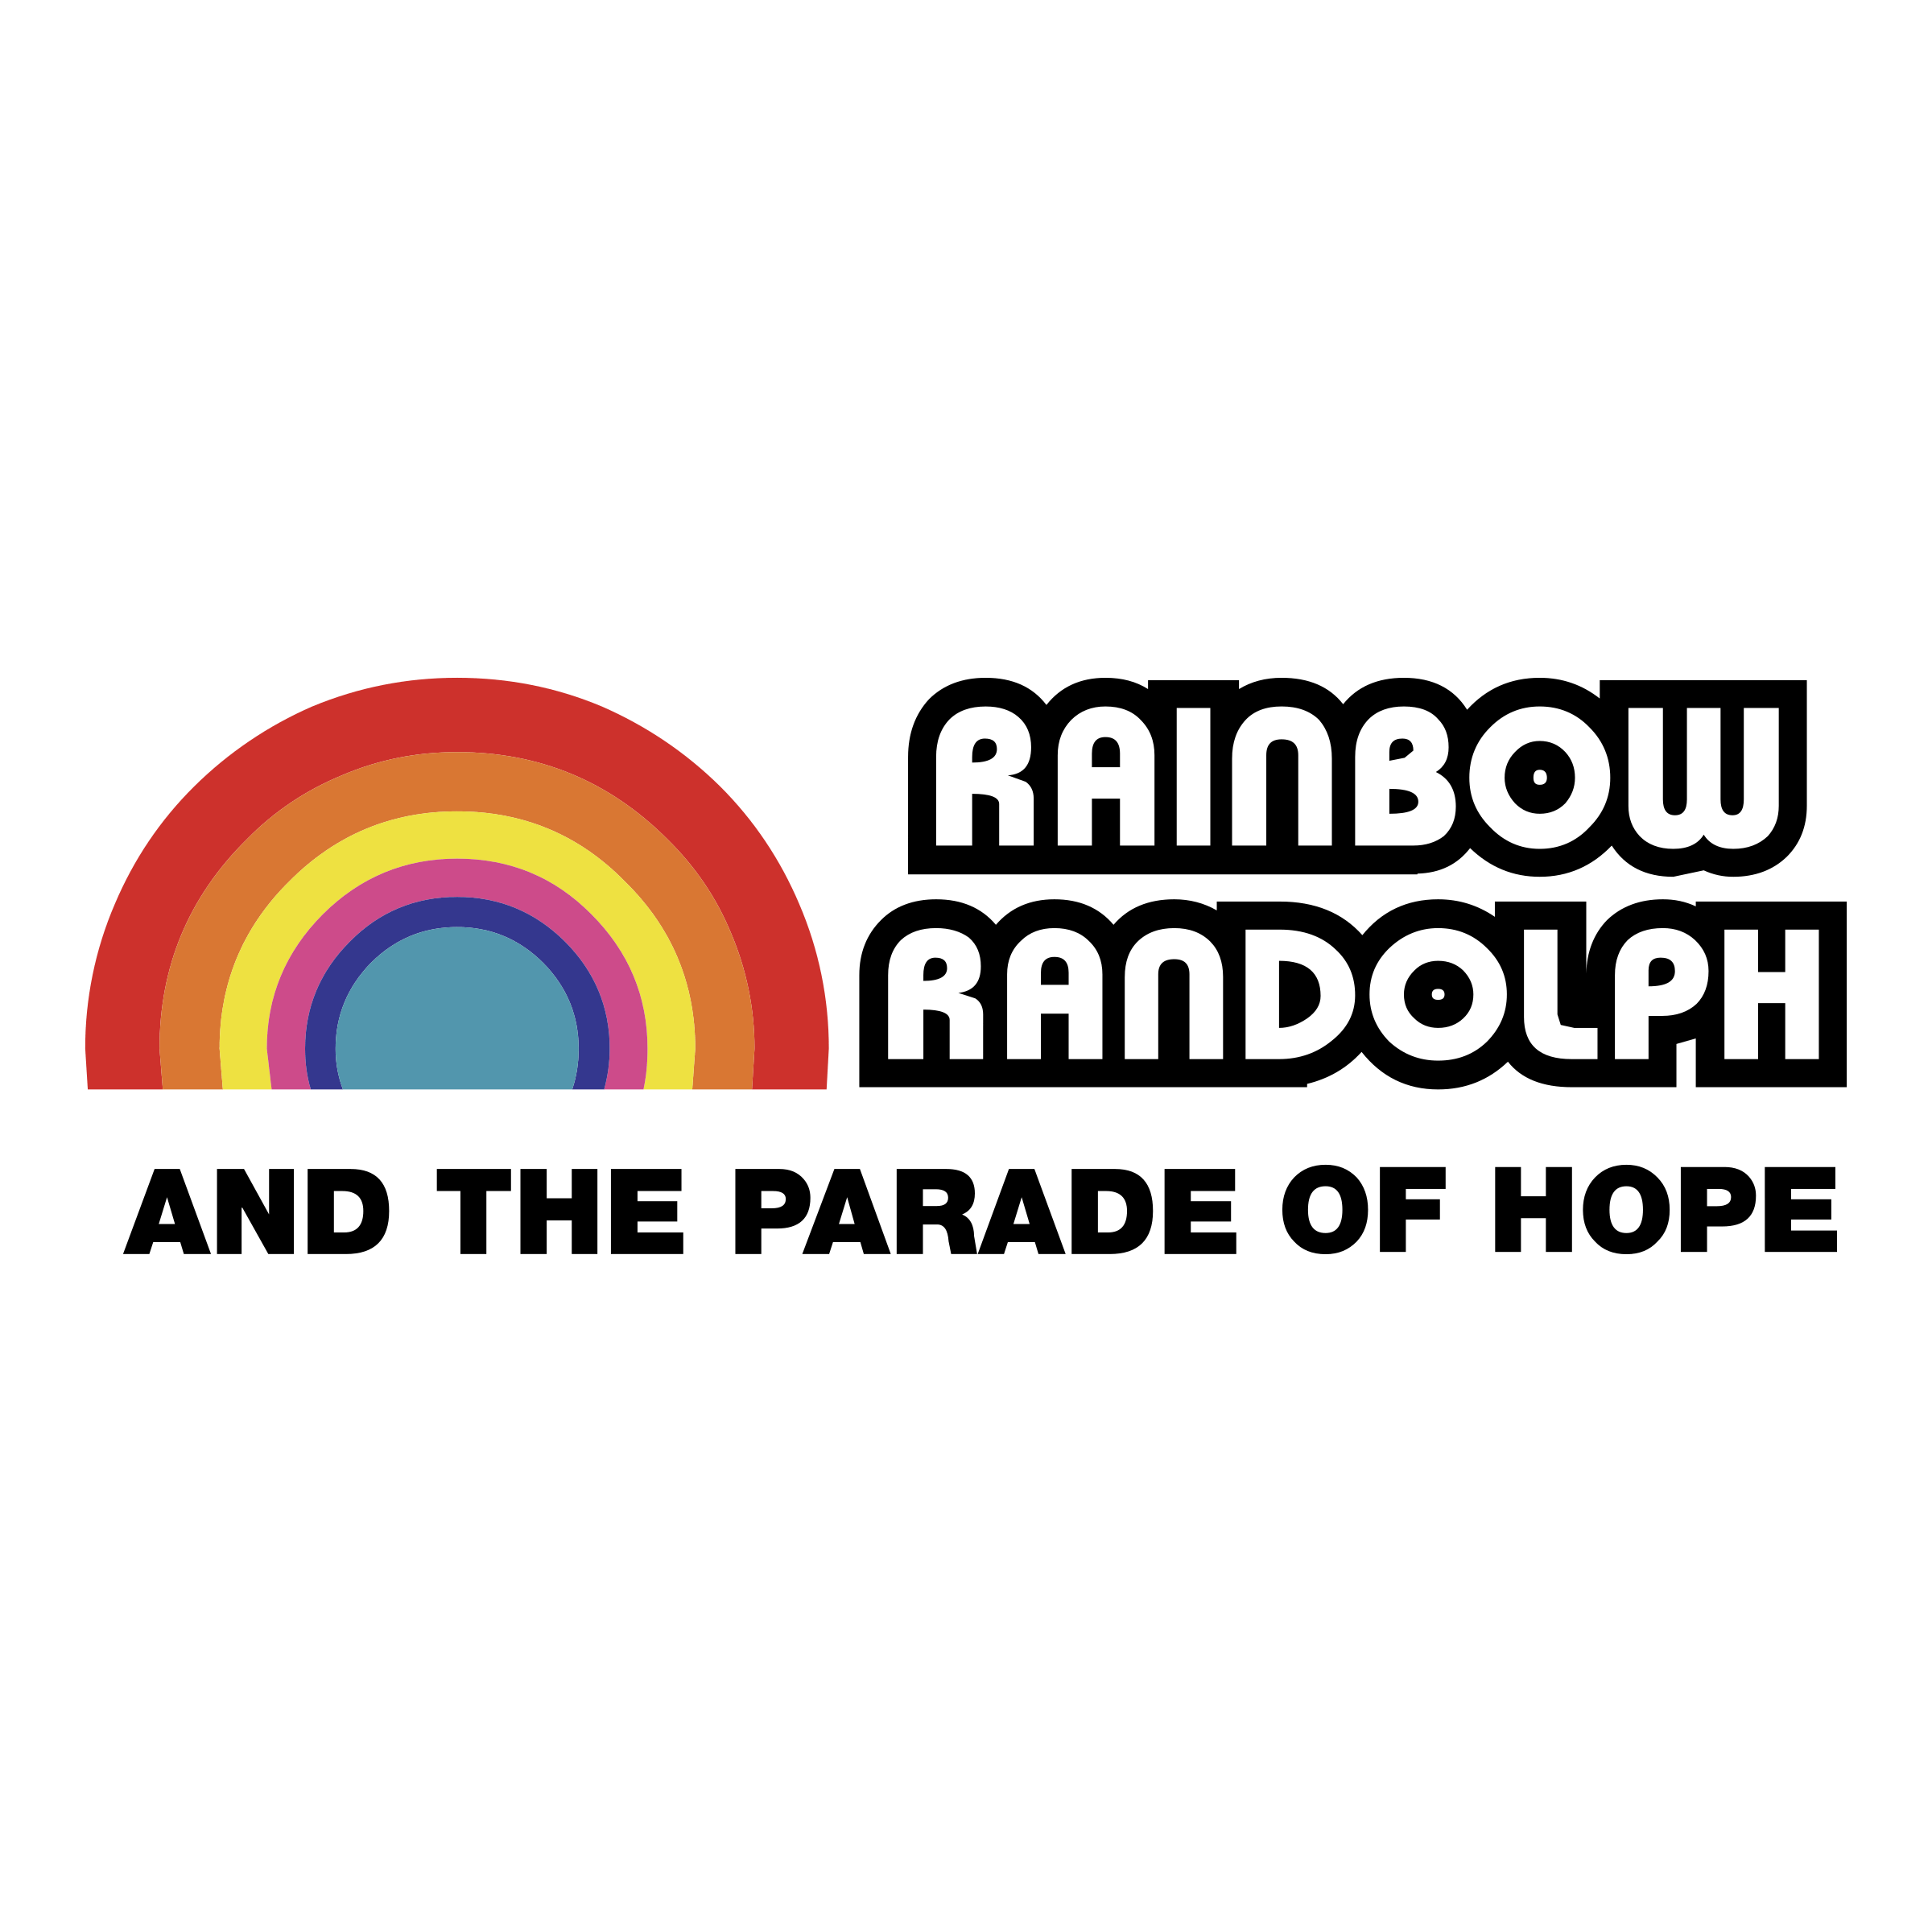 Randolph Logo - Rainbow Randolph Logo PNG Transparent & SVG Vector